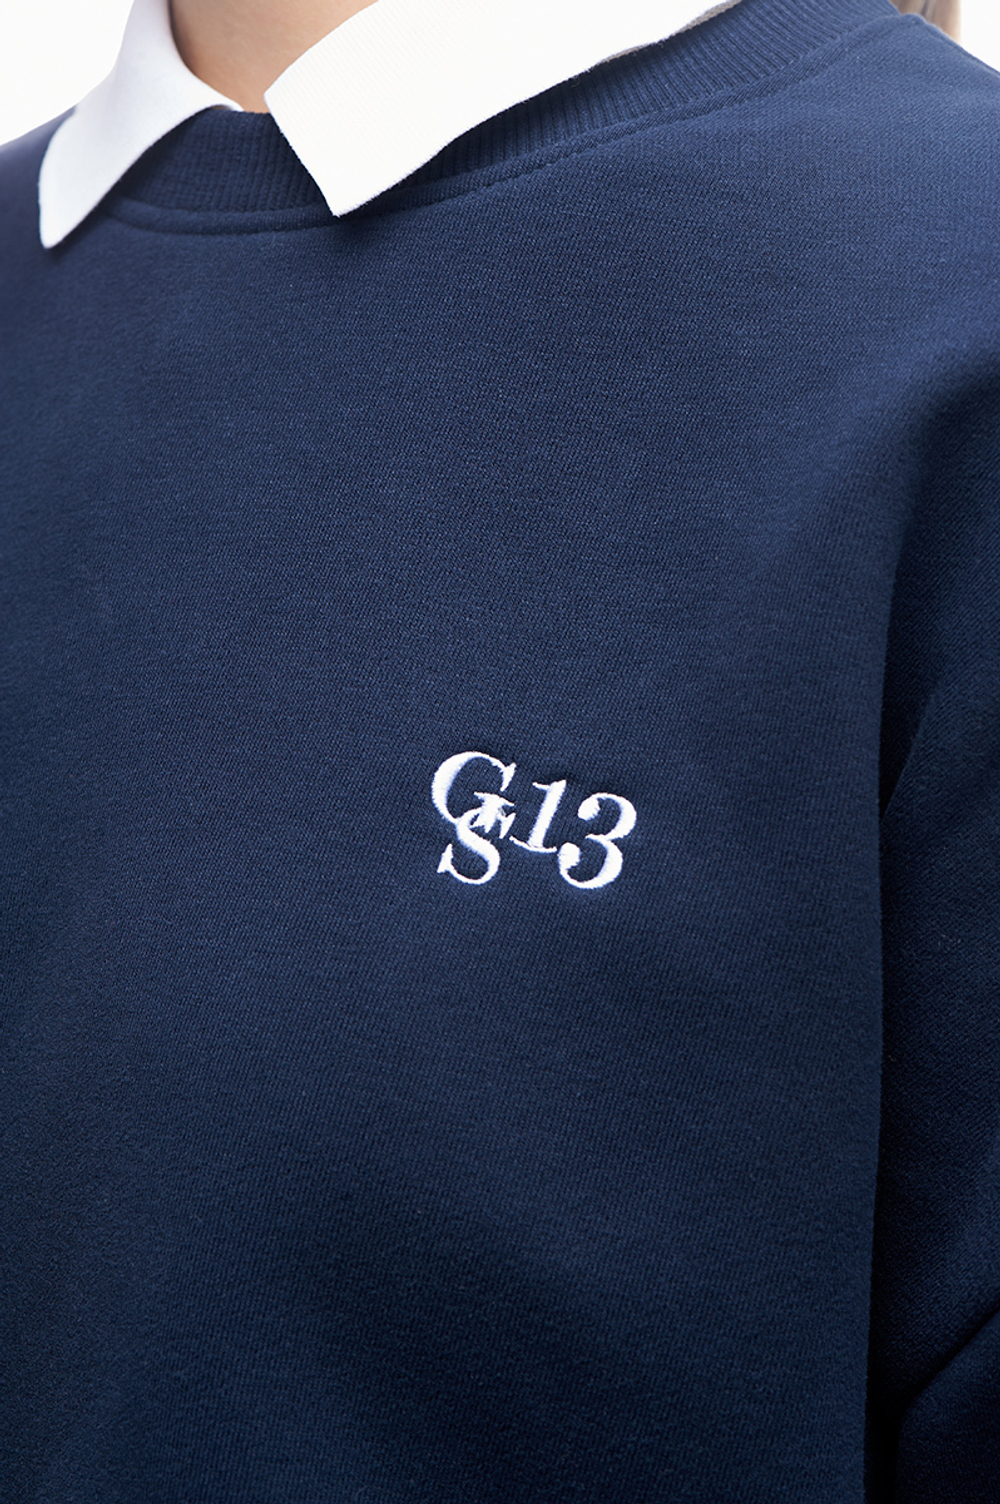 Кофта свитшот тёмно-синяя укороченная, с логотипом GS13